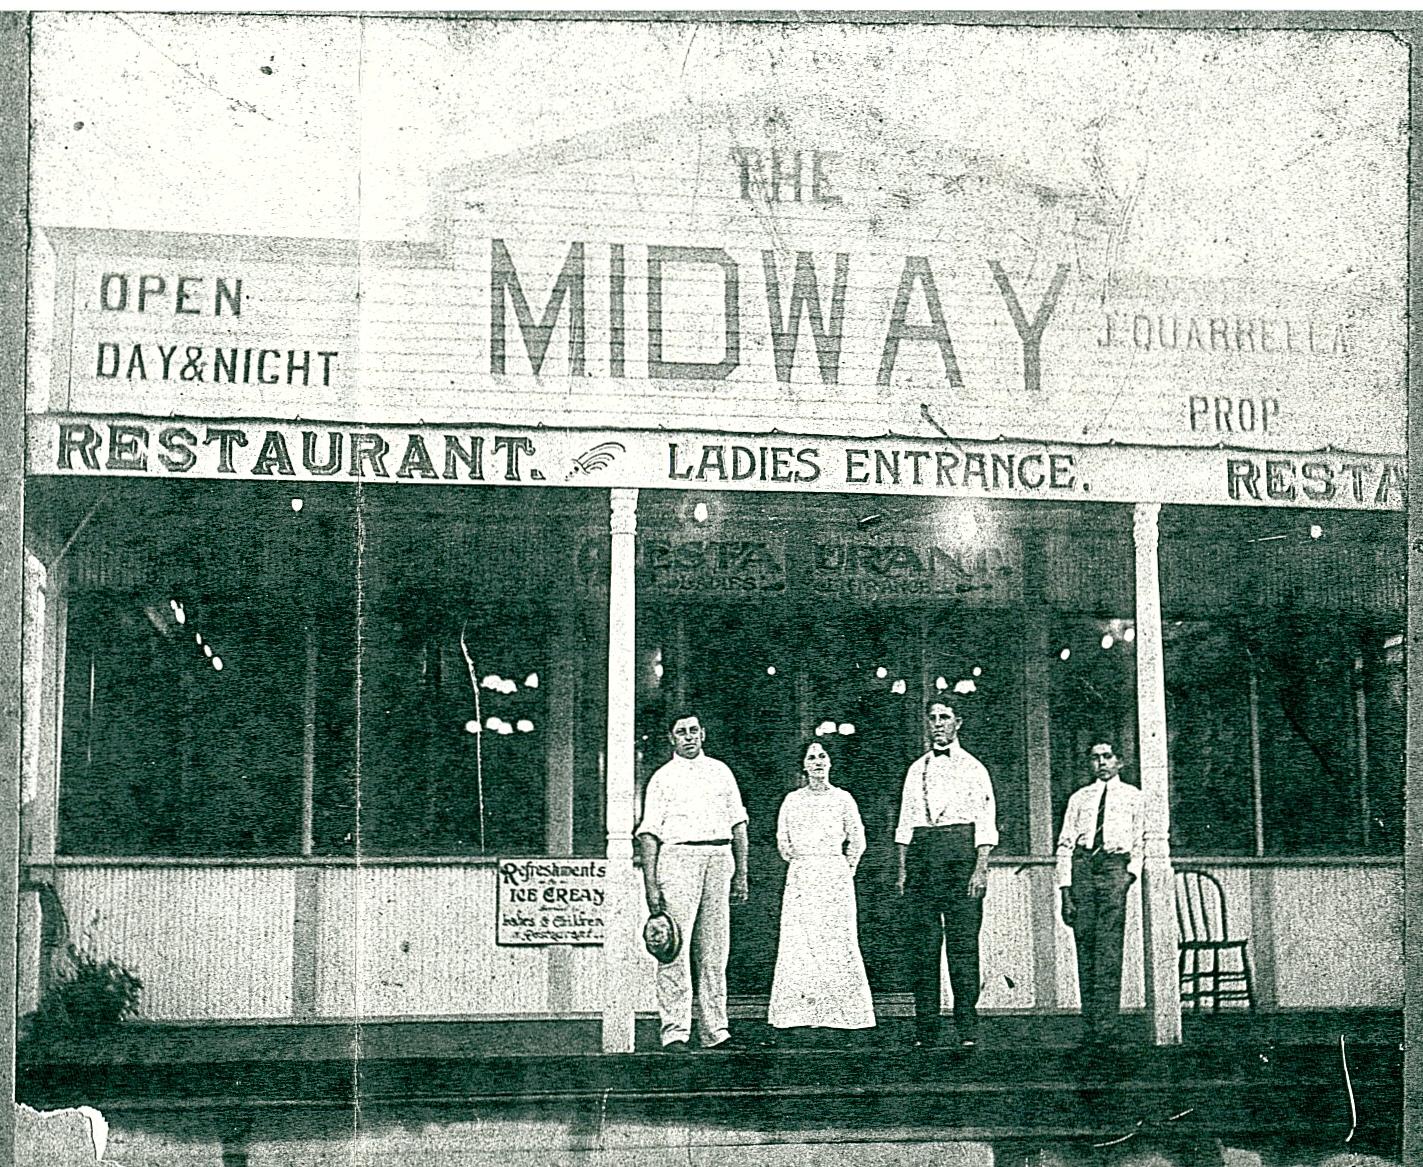 1914 - John Quarrella's Midway Restaurant at Milneburg